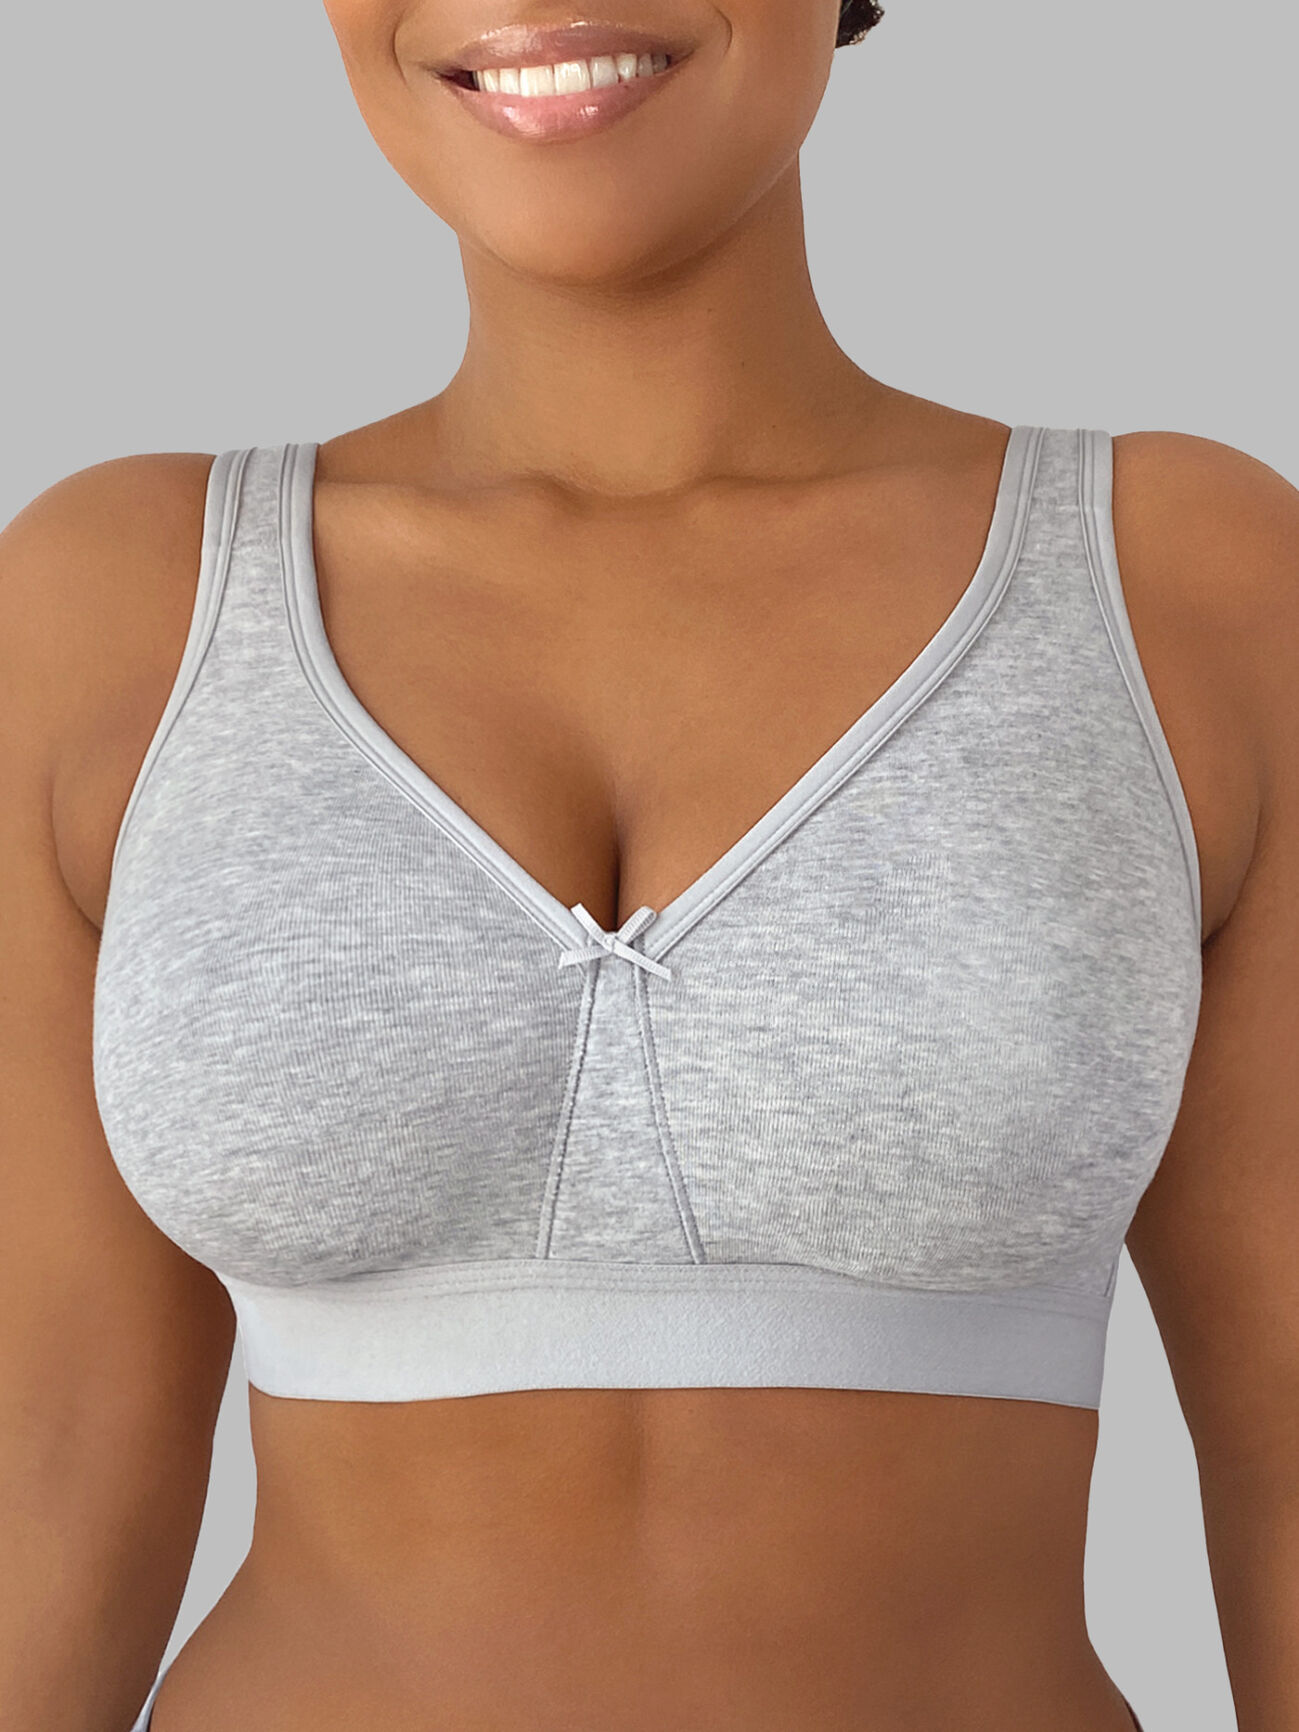 Women's Cotton Underwire Bra Full-Coverage Comfortable Breathable